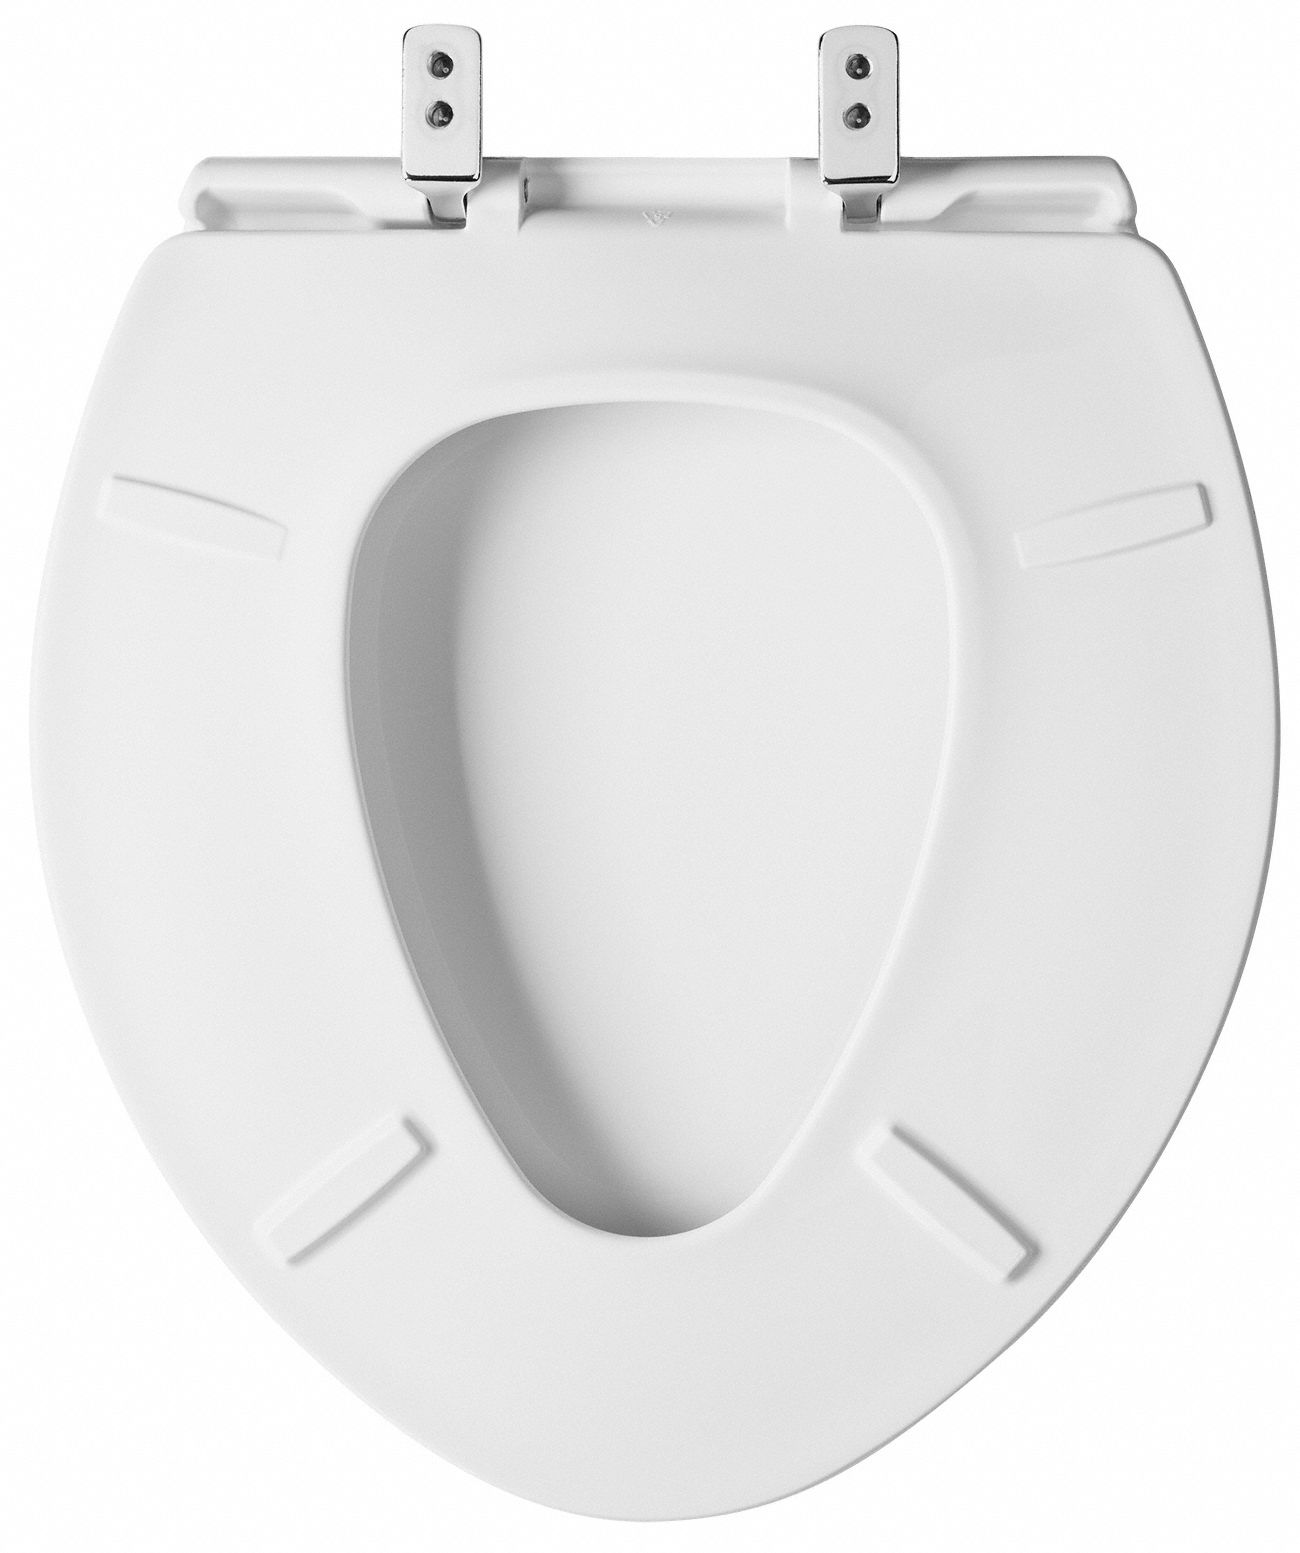 Elongated Standard Toilet Seat Type, Elongated Vs Round Toilet Seat